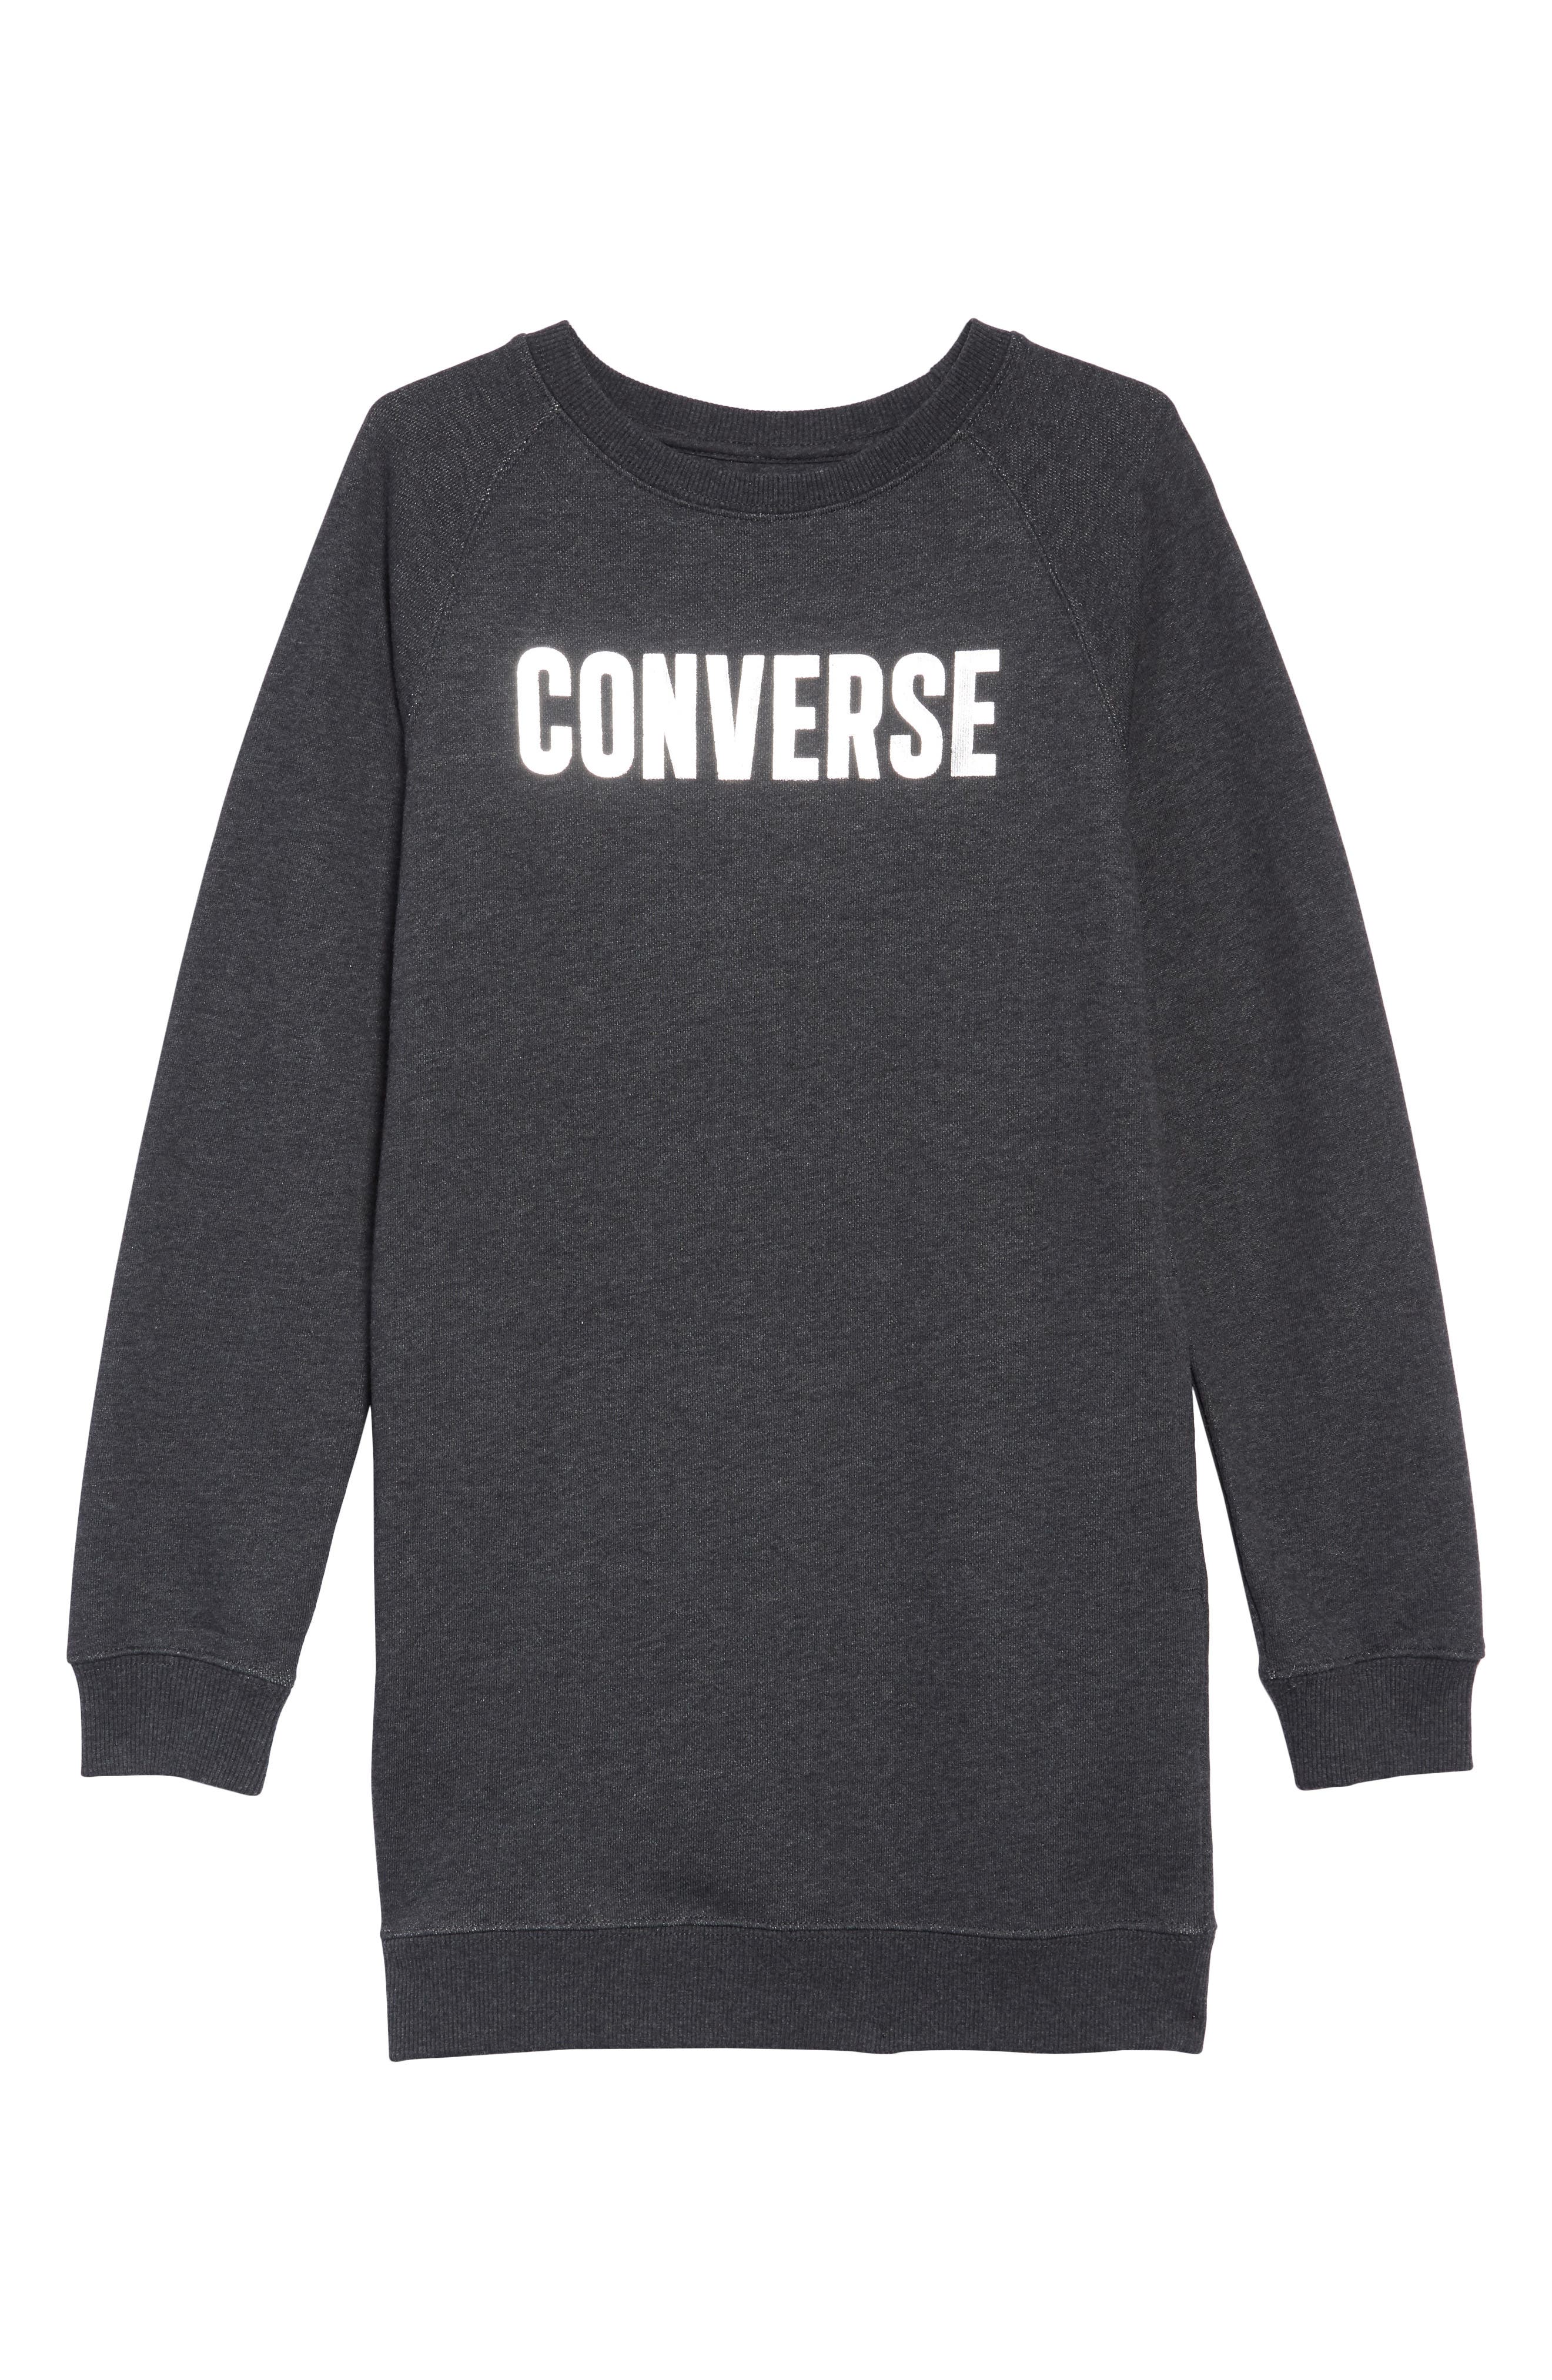 converse sweatshirt dress